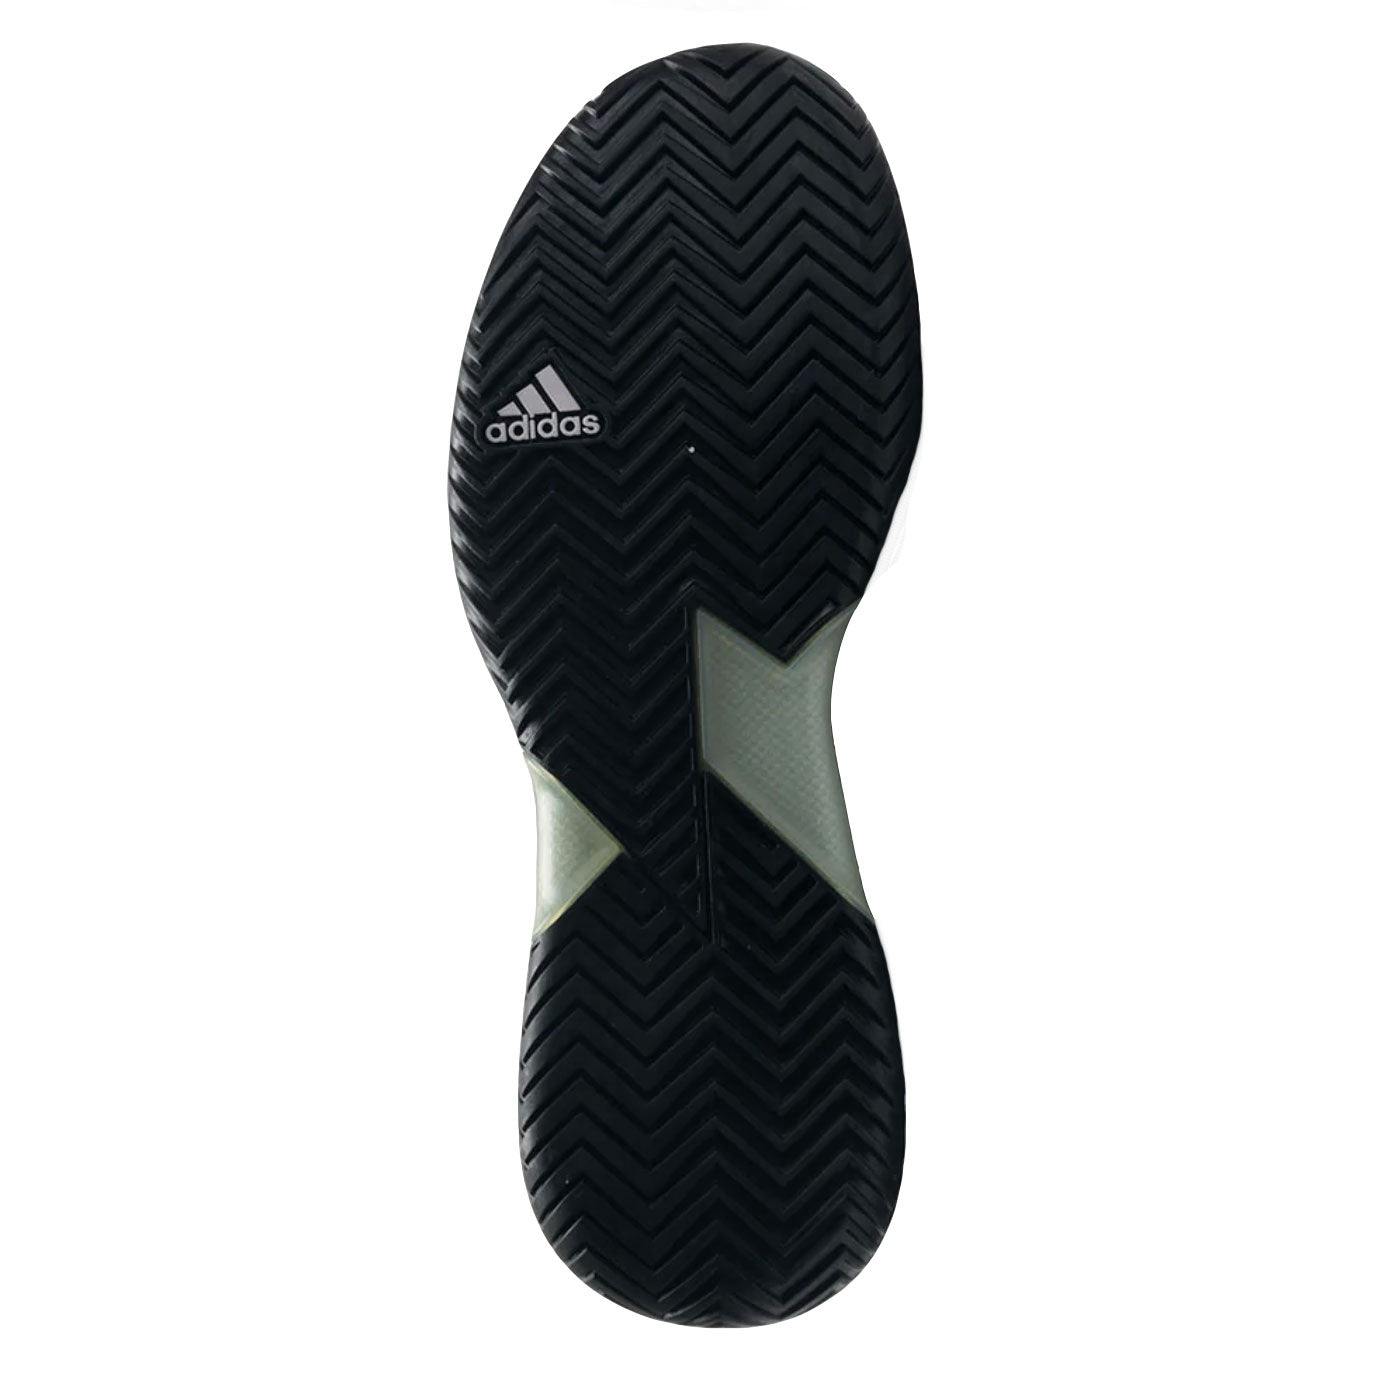 Adidas Adizero Ubersonic 4 Heat Rdy Grey Mens Tennis Shoes - GRY/WHT/BLK 037 / D Medium / 13.0